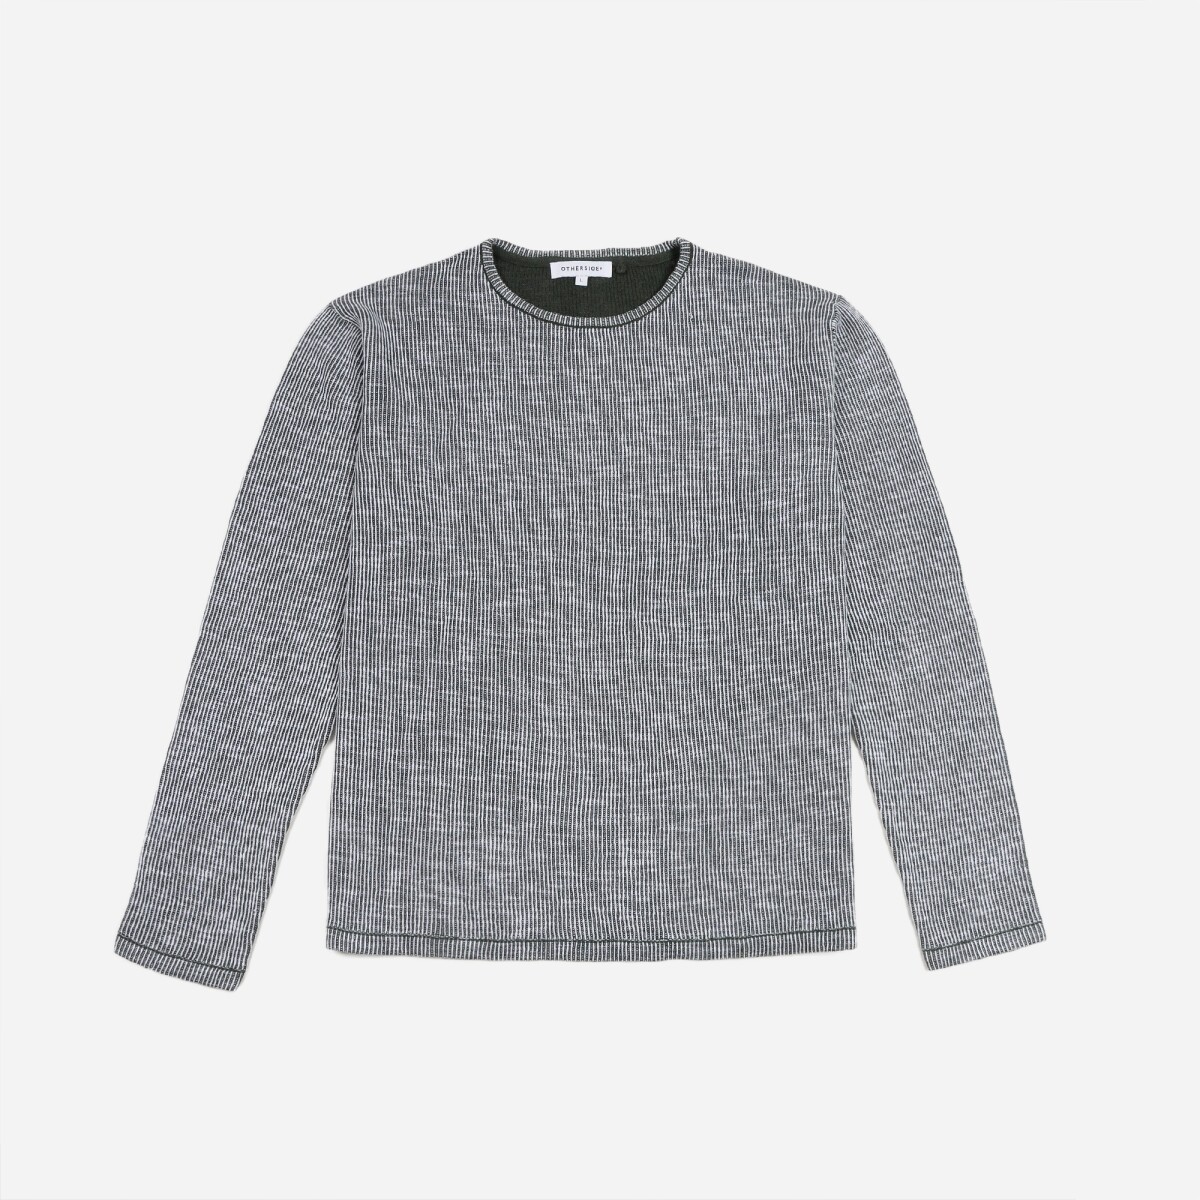 Sweater jaspeado - Hombre - VERDE OLIVA 